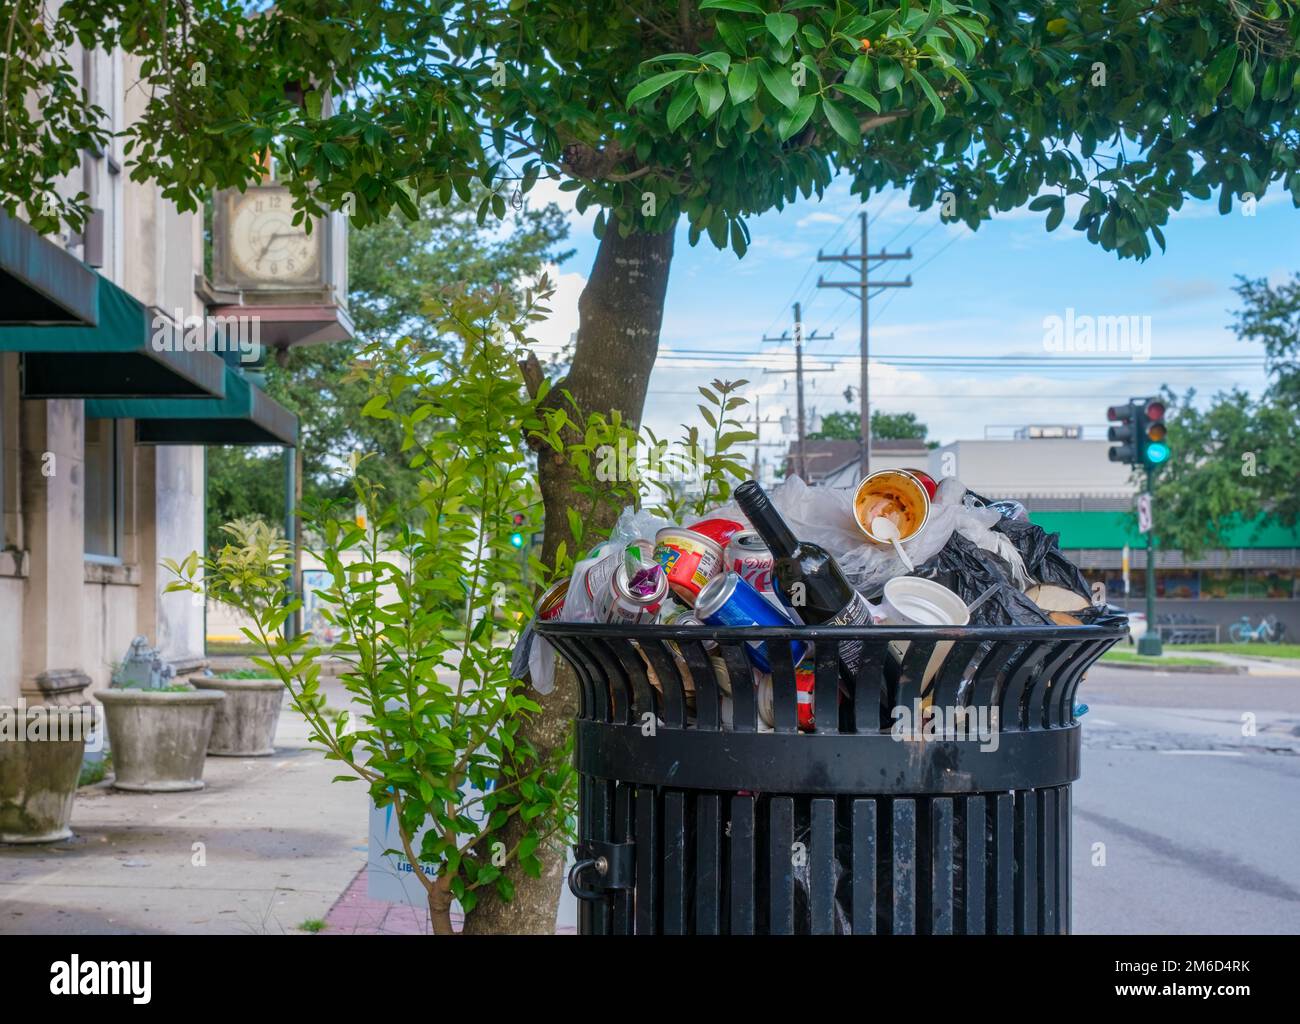 https://c8.alamy.com/comp/2M6D4RK/new-orleans-la-usa-august-11-2022-full-trash-can-on-oak-street-in-uptown-neighborhood-2M6D4RK.jpg